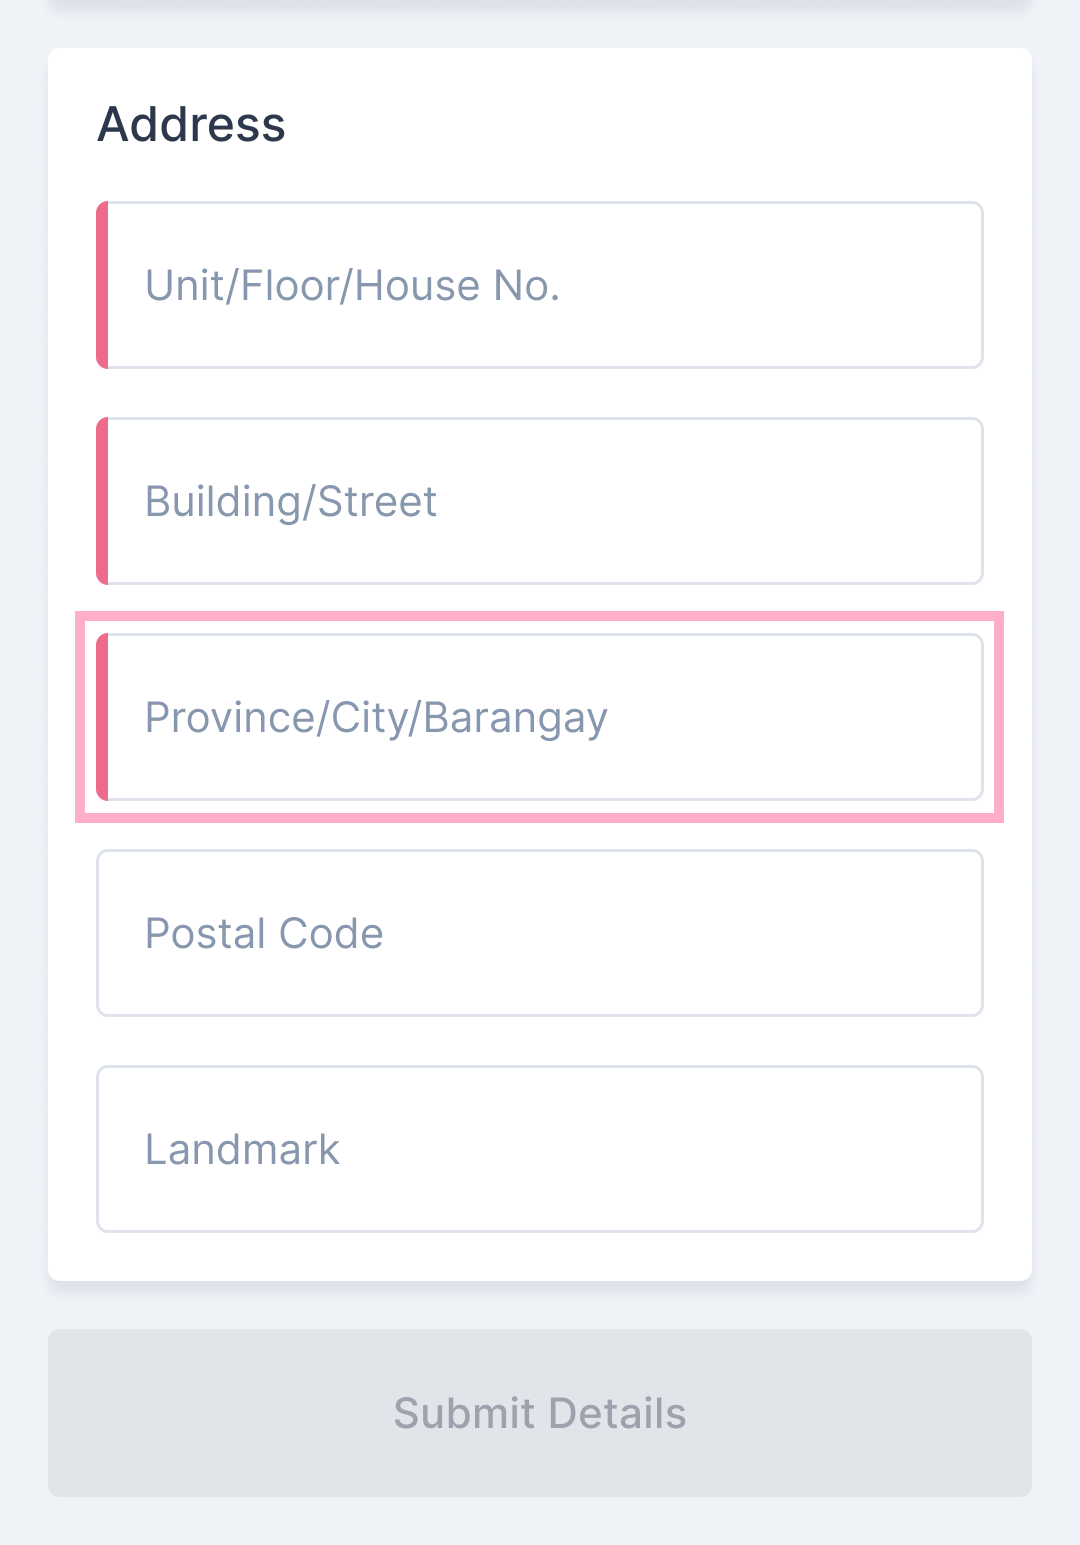 add pickup details - province, city, barangay